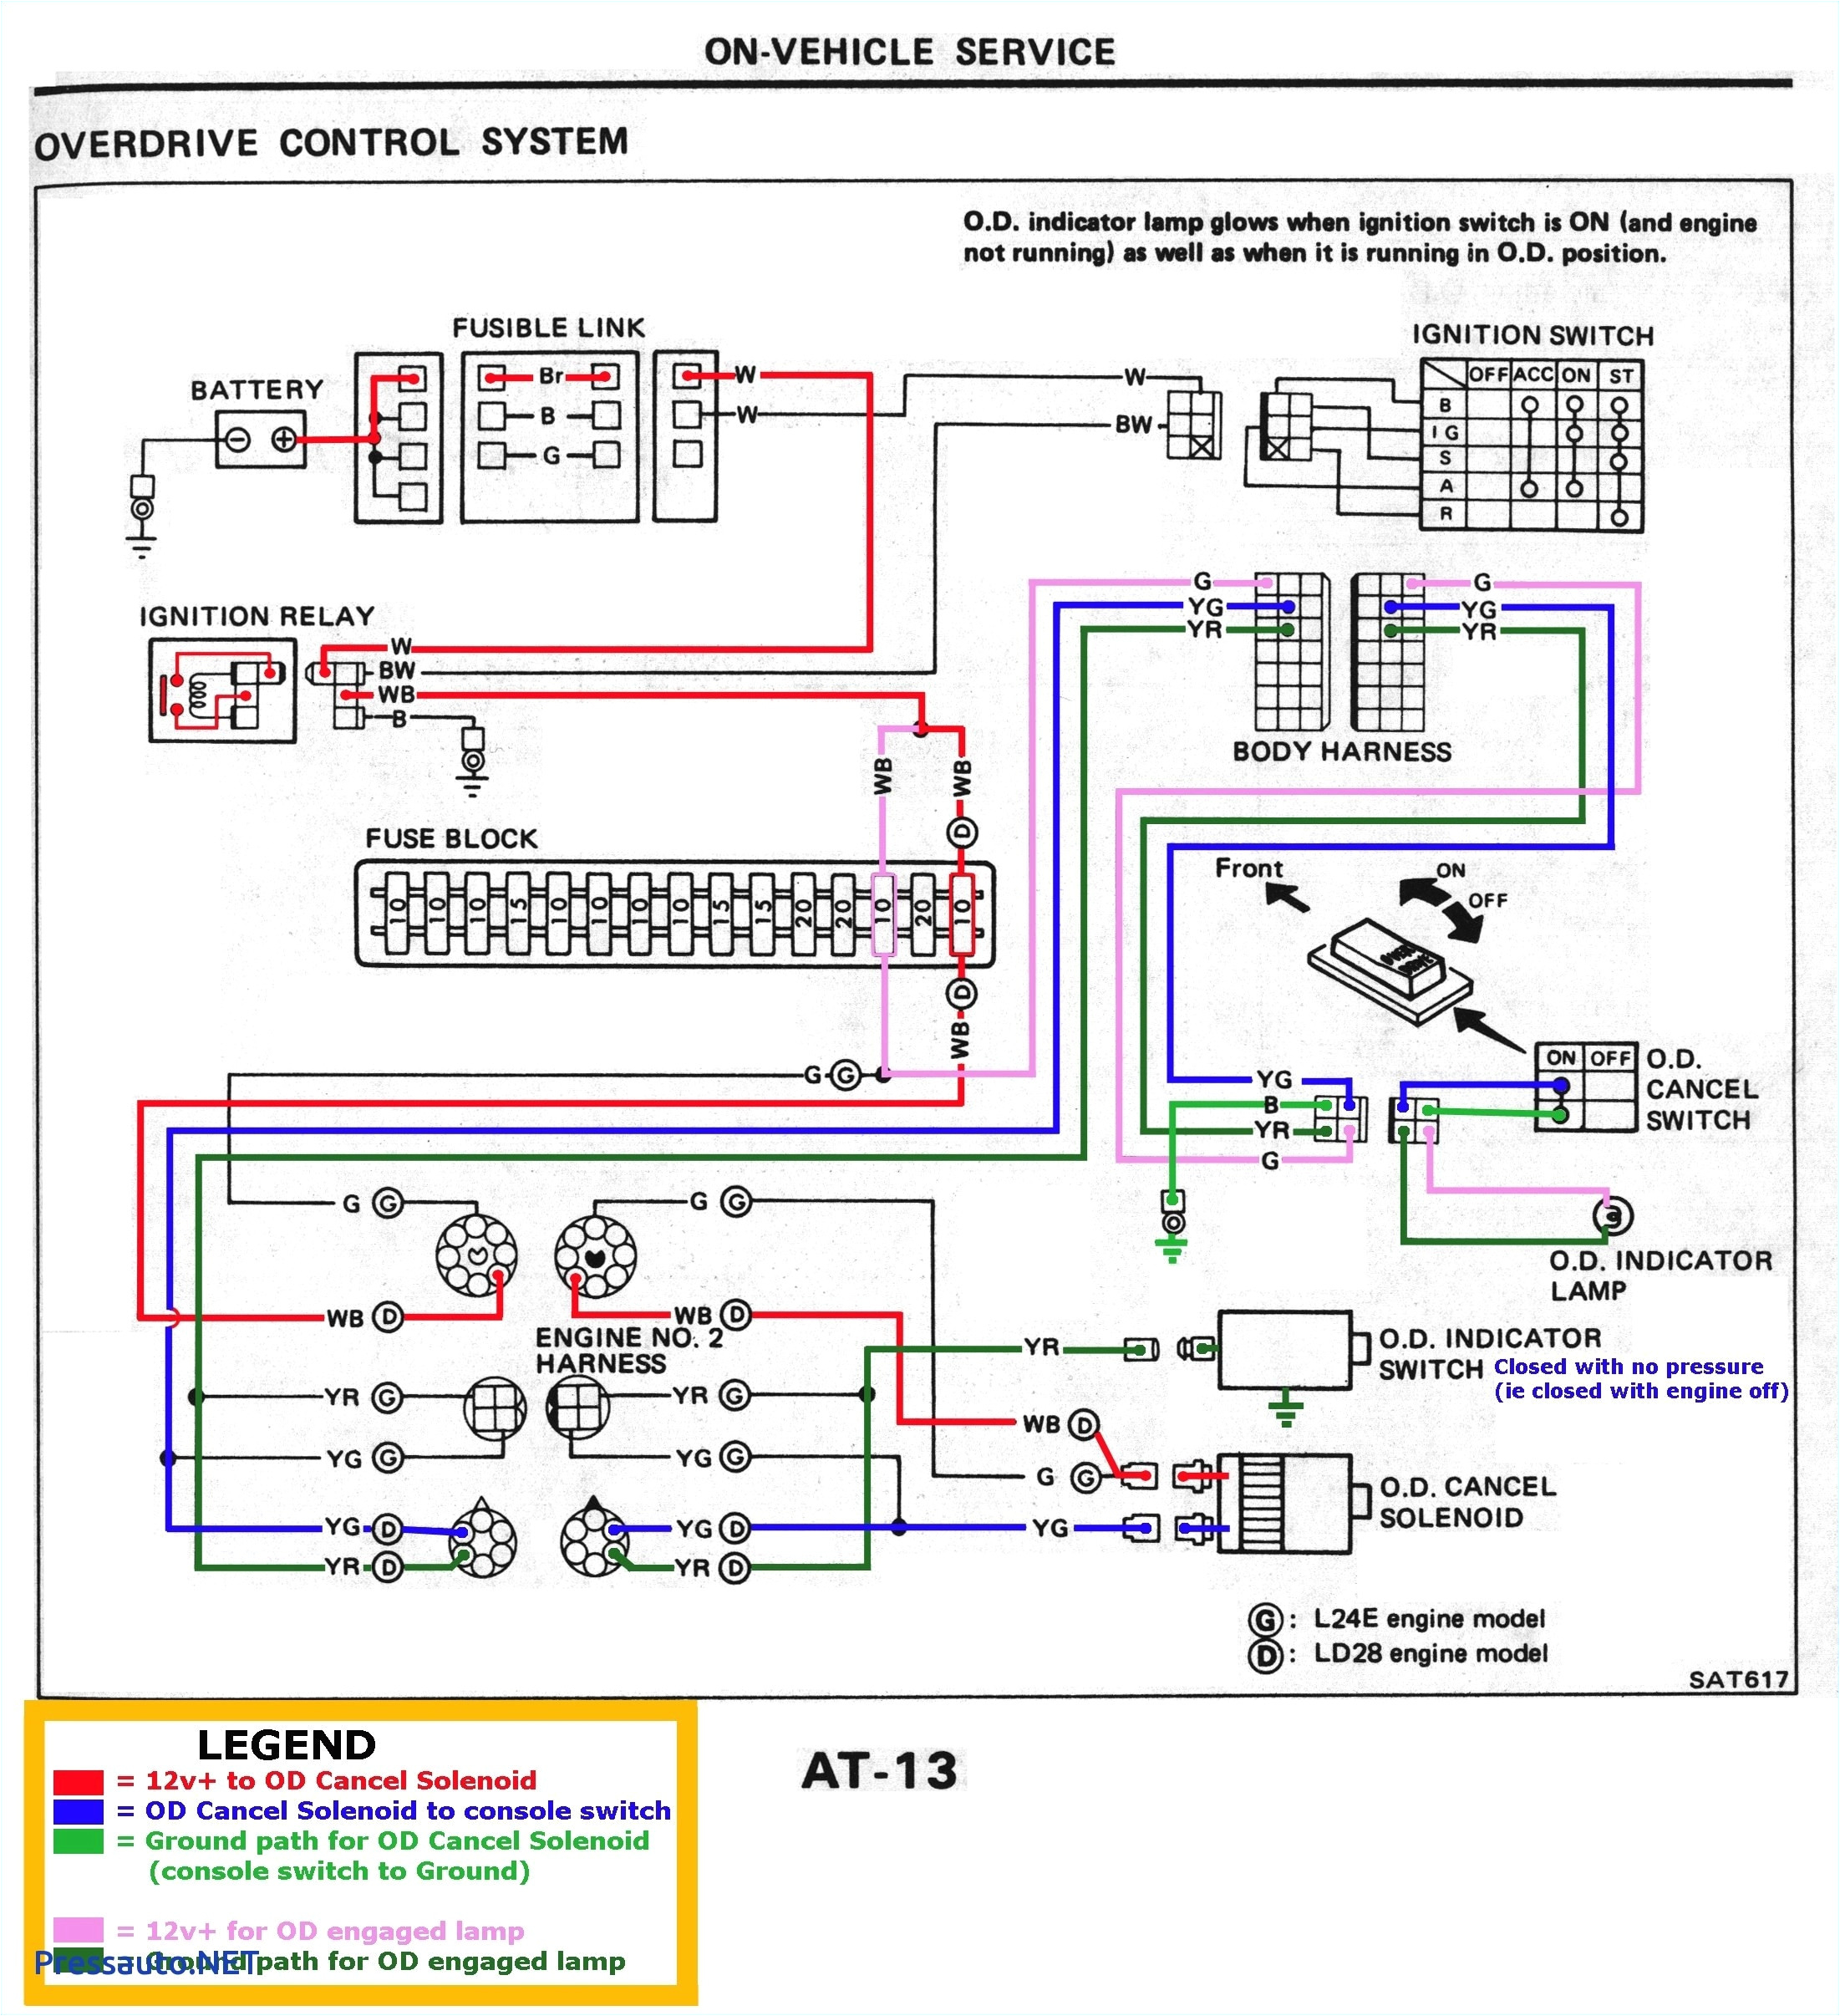 xbox wiring diagrams wiring diagram name xbox wiring diagrams